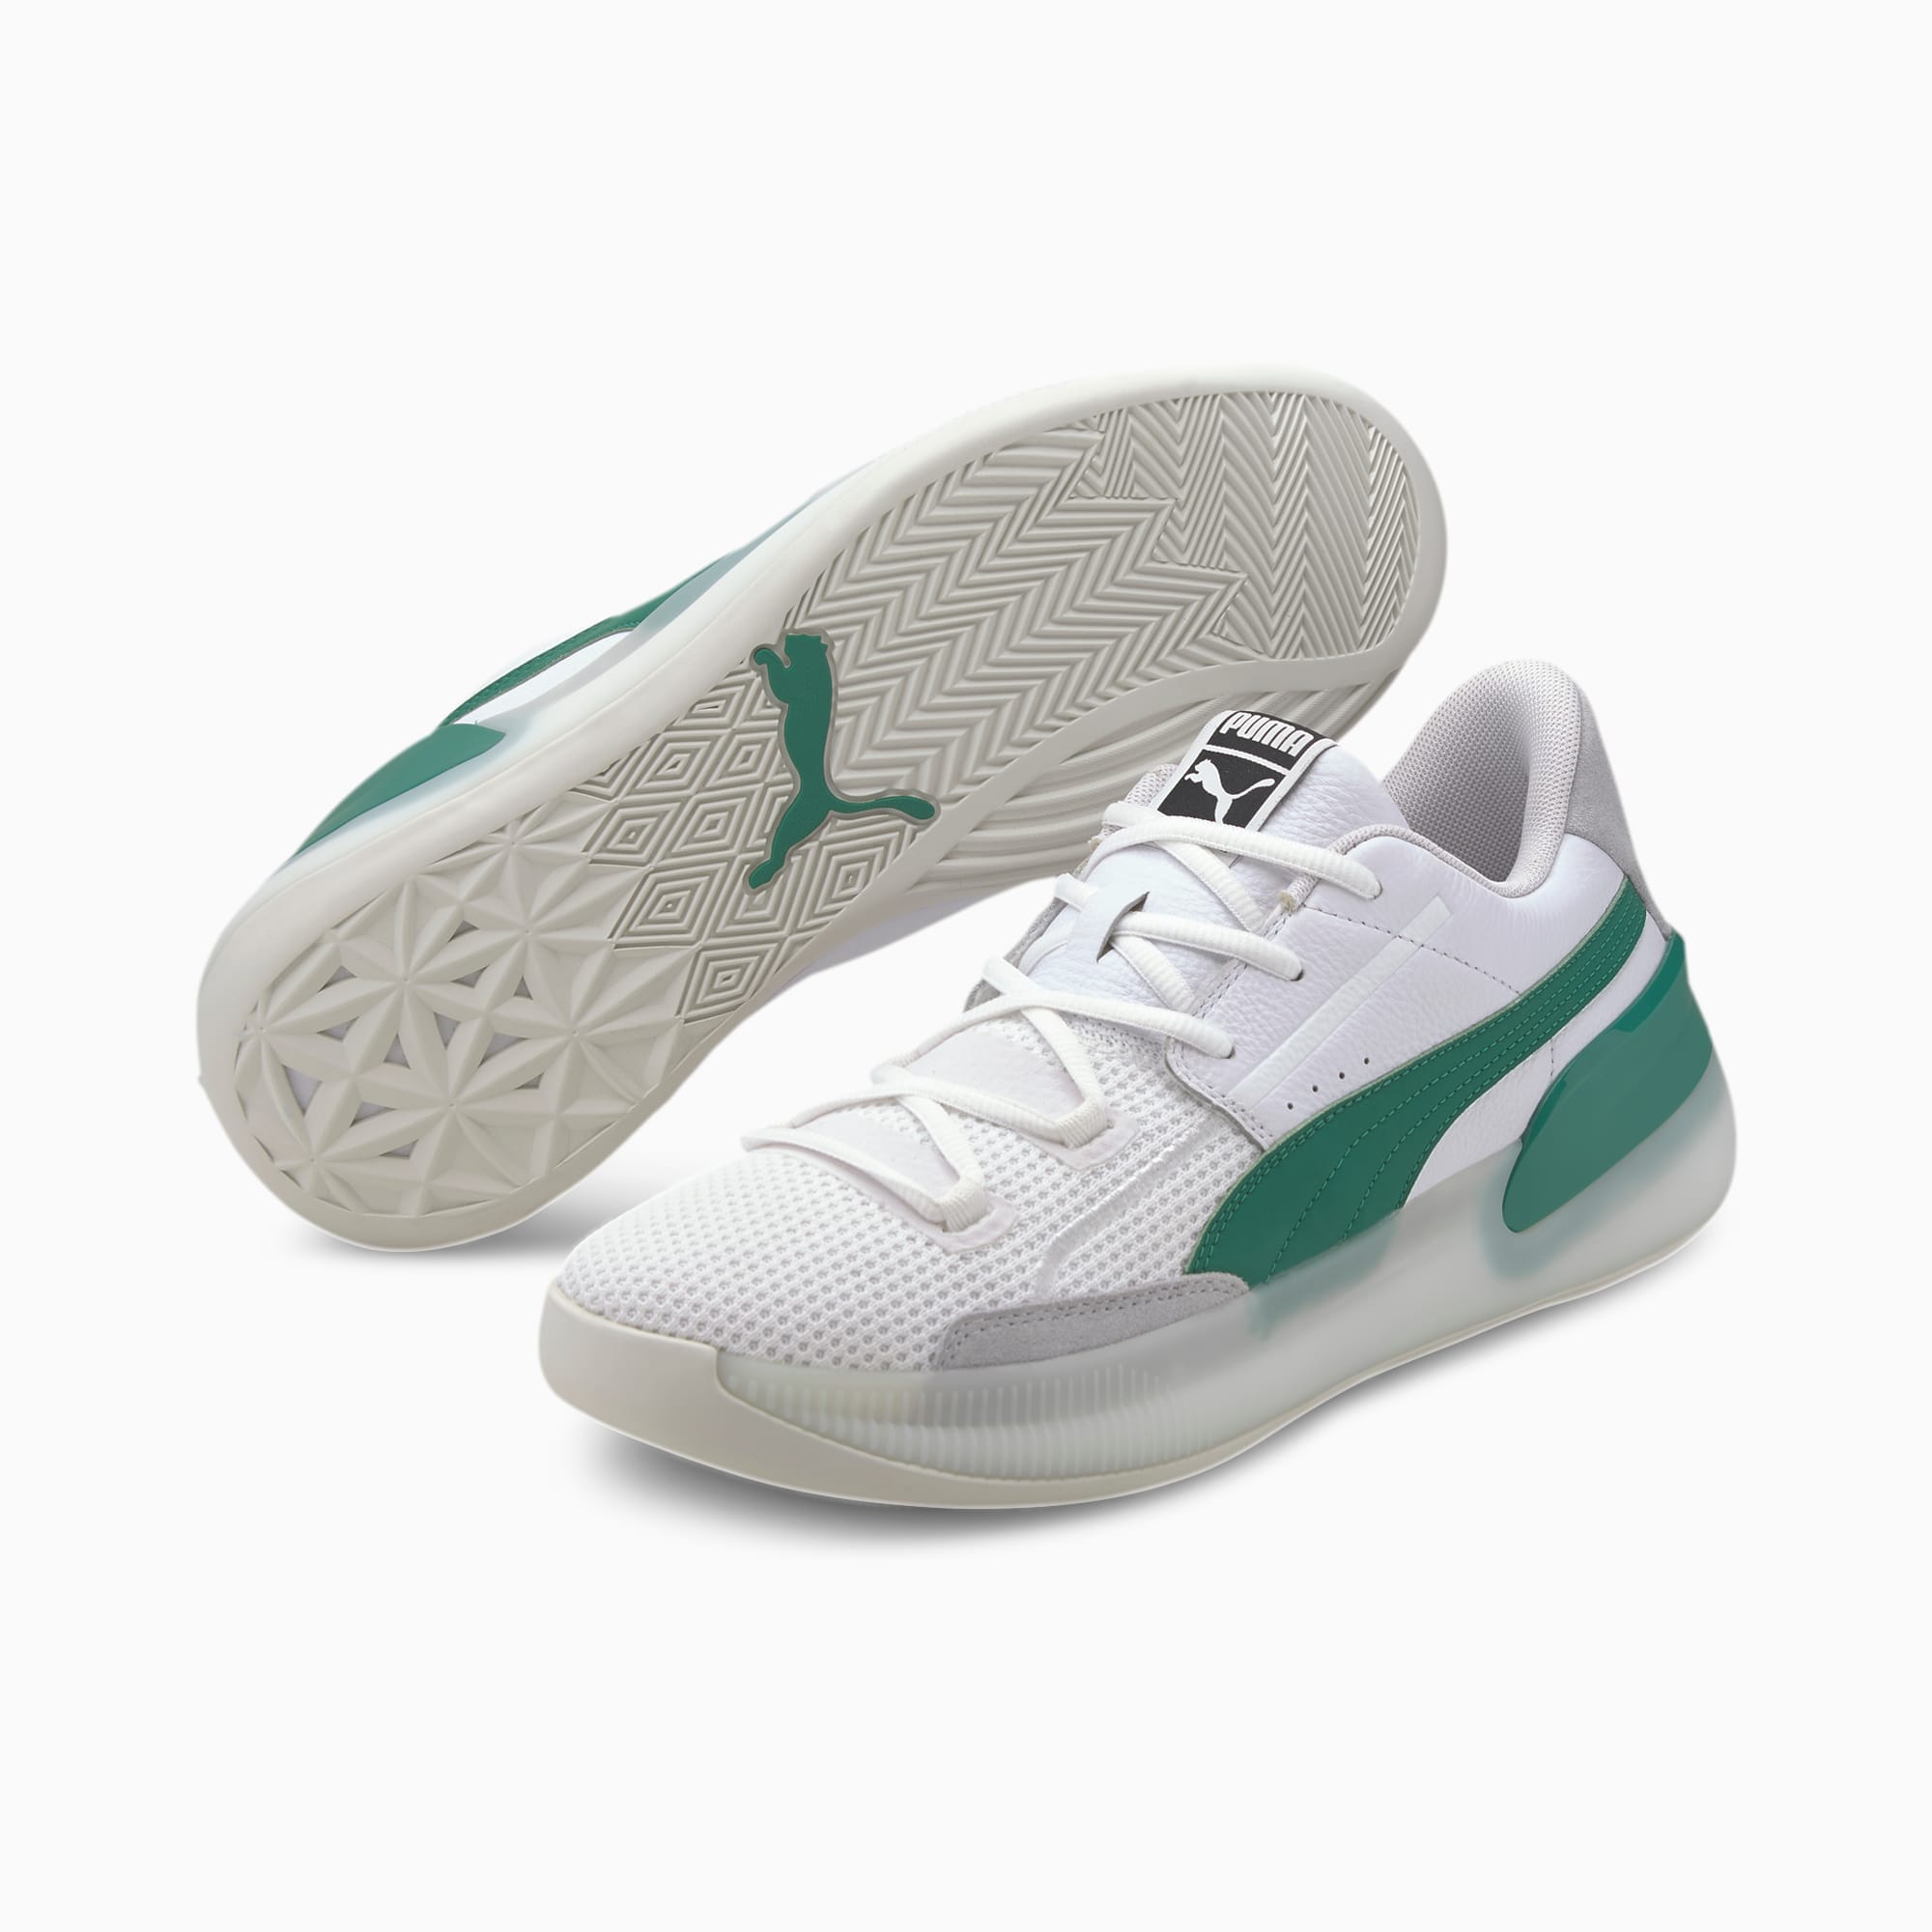 Clyde Hardwood Basketball Shoes | Puma 